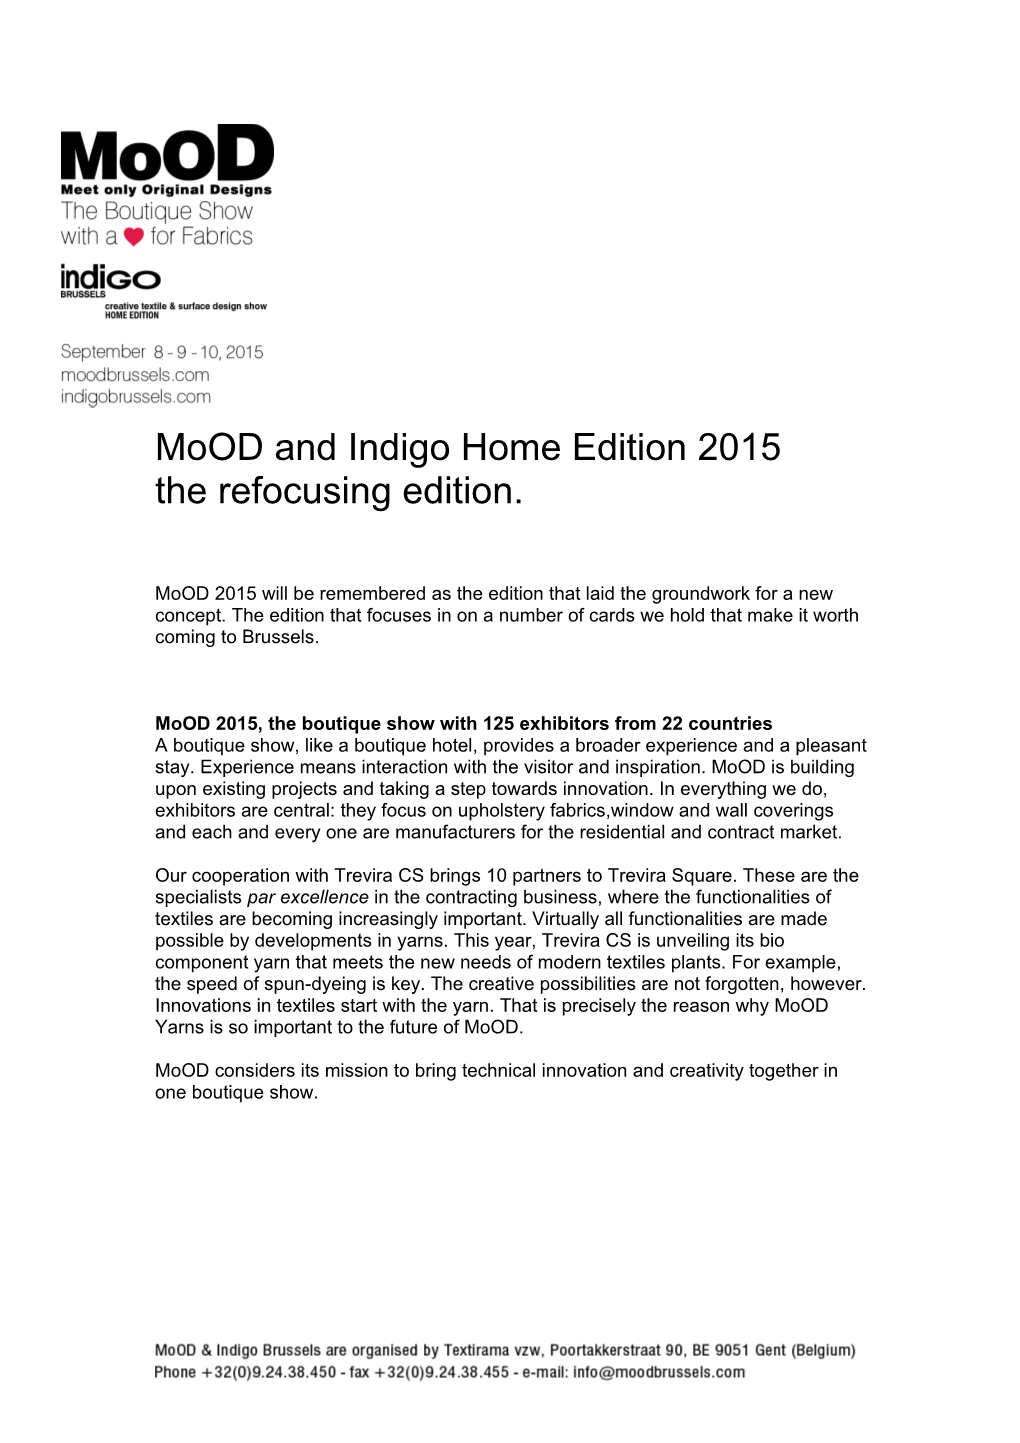 Mood and Indigo Home Edition 2015